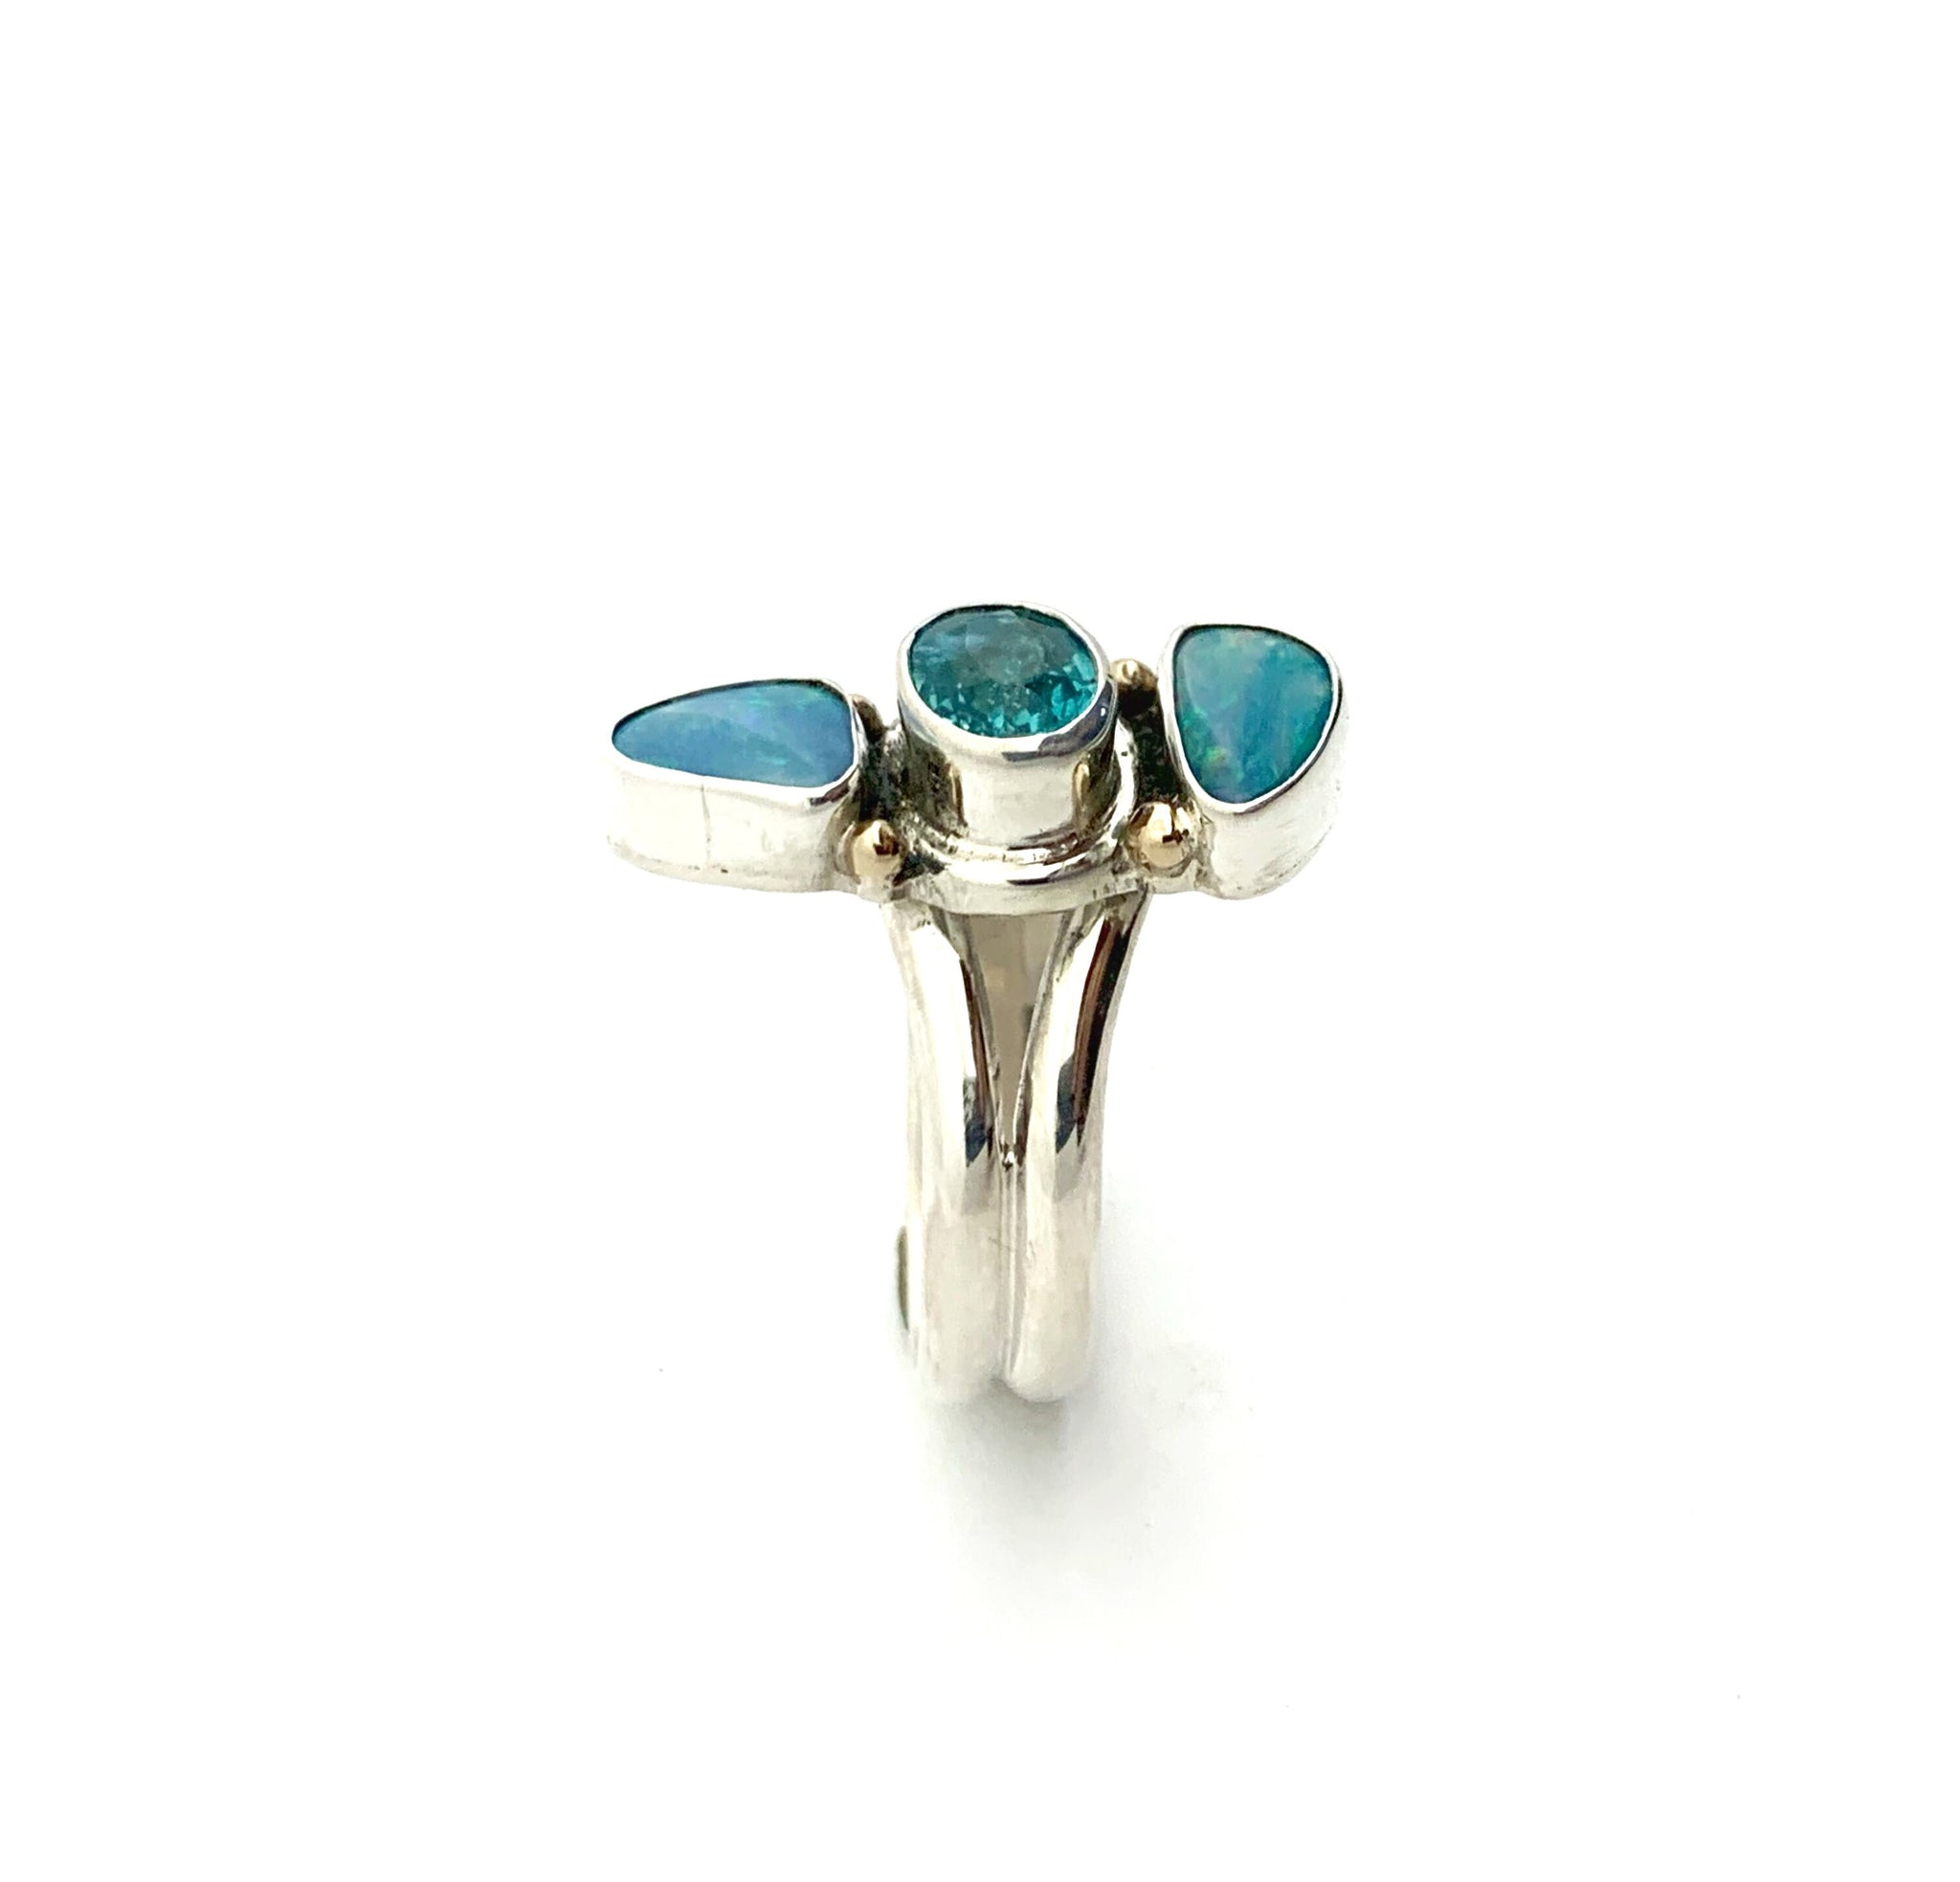 Australian Opal and Apatite Ring, Multi Blue Gemstone Ring, Boho Style Aqua Ring